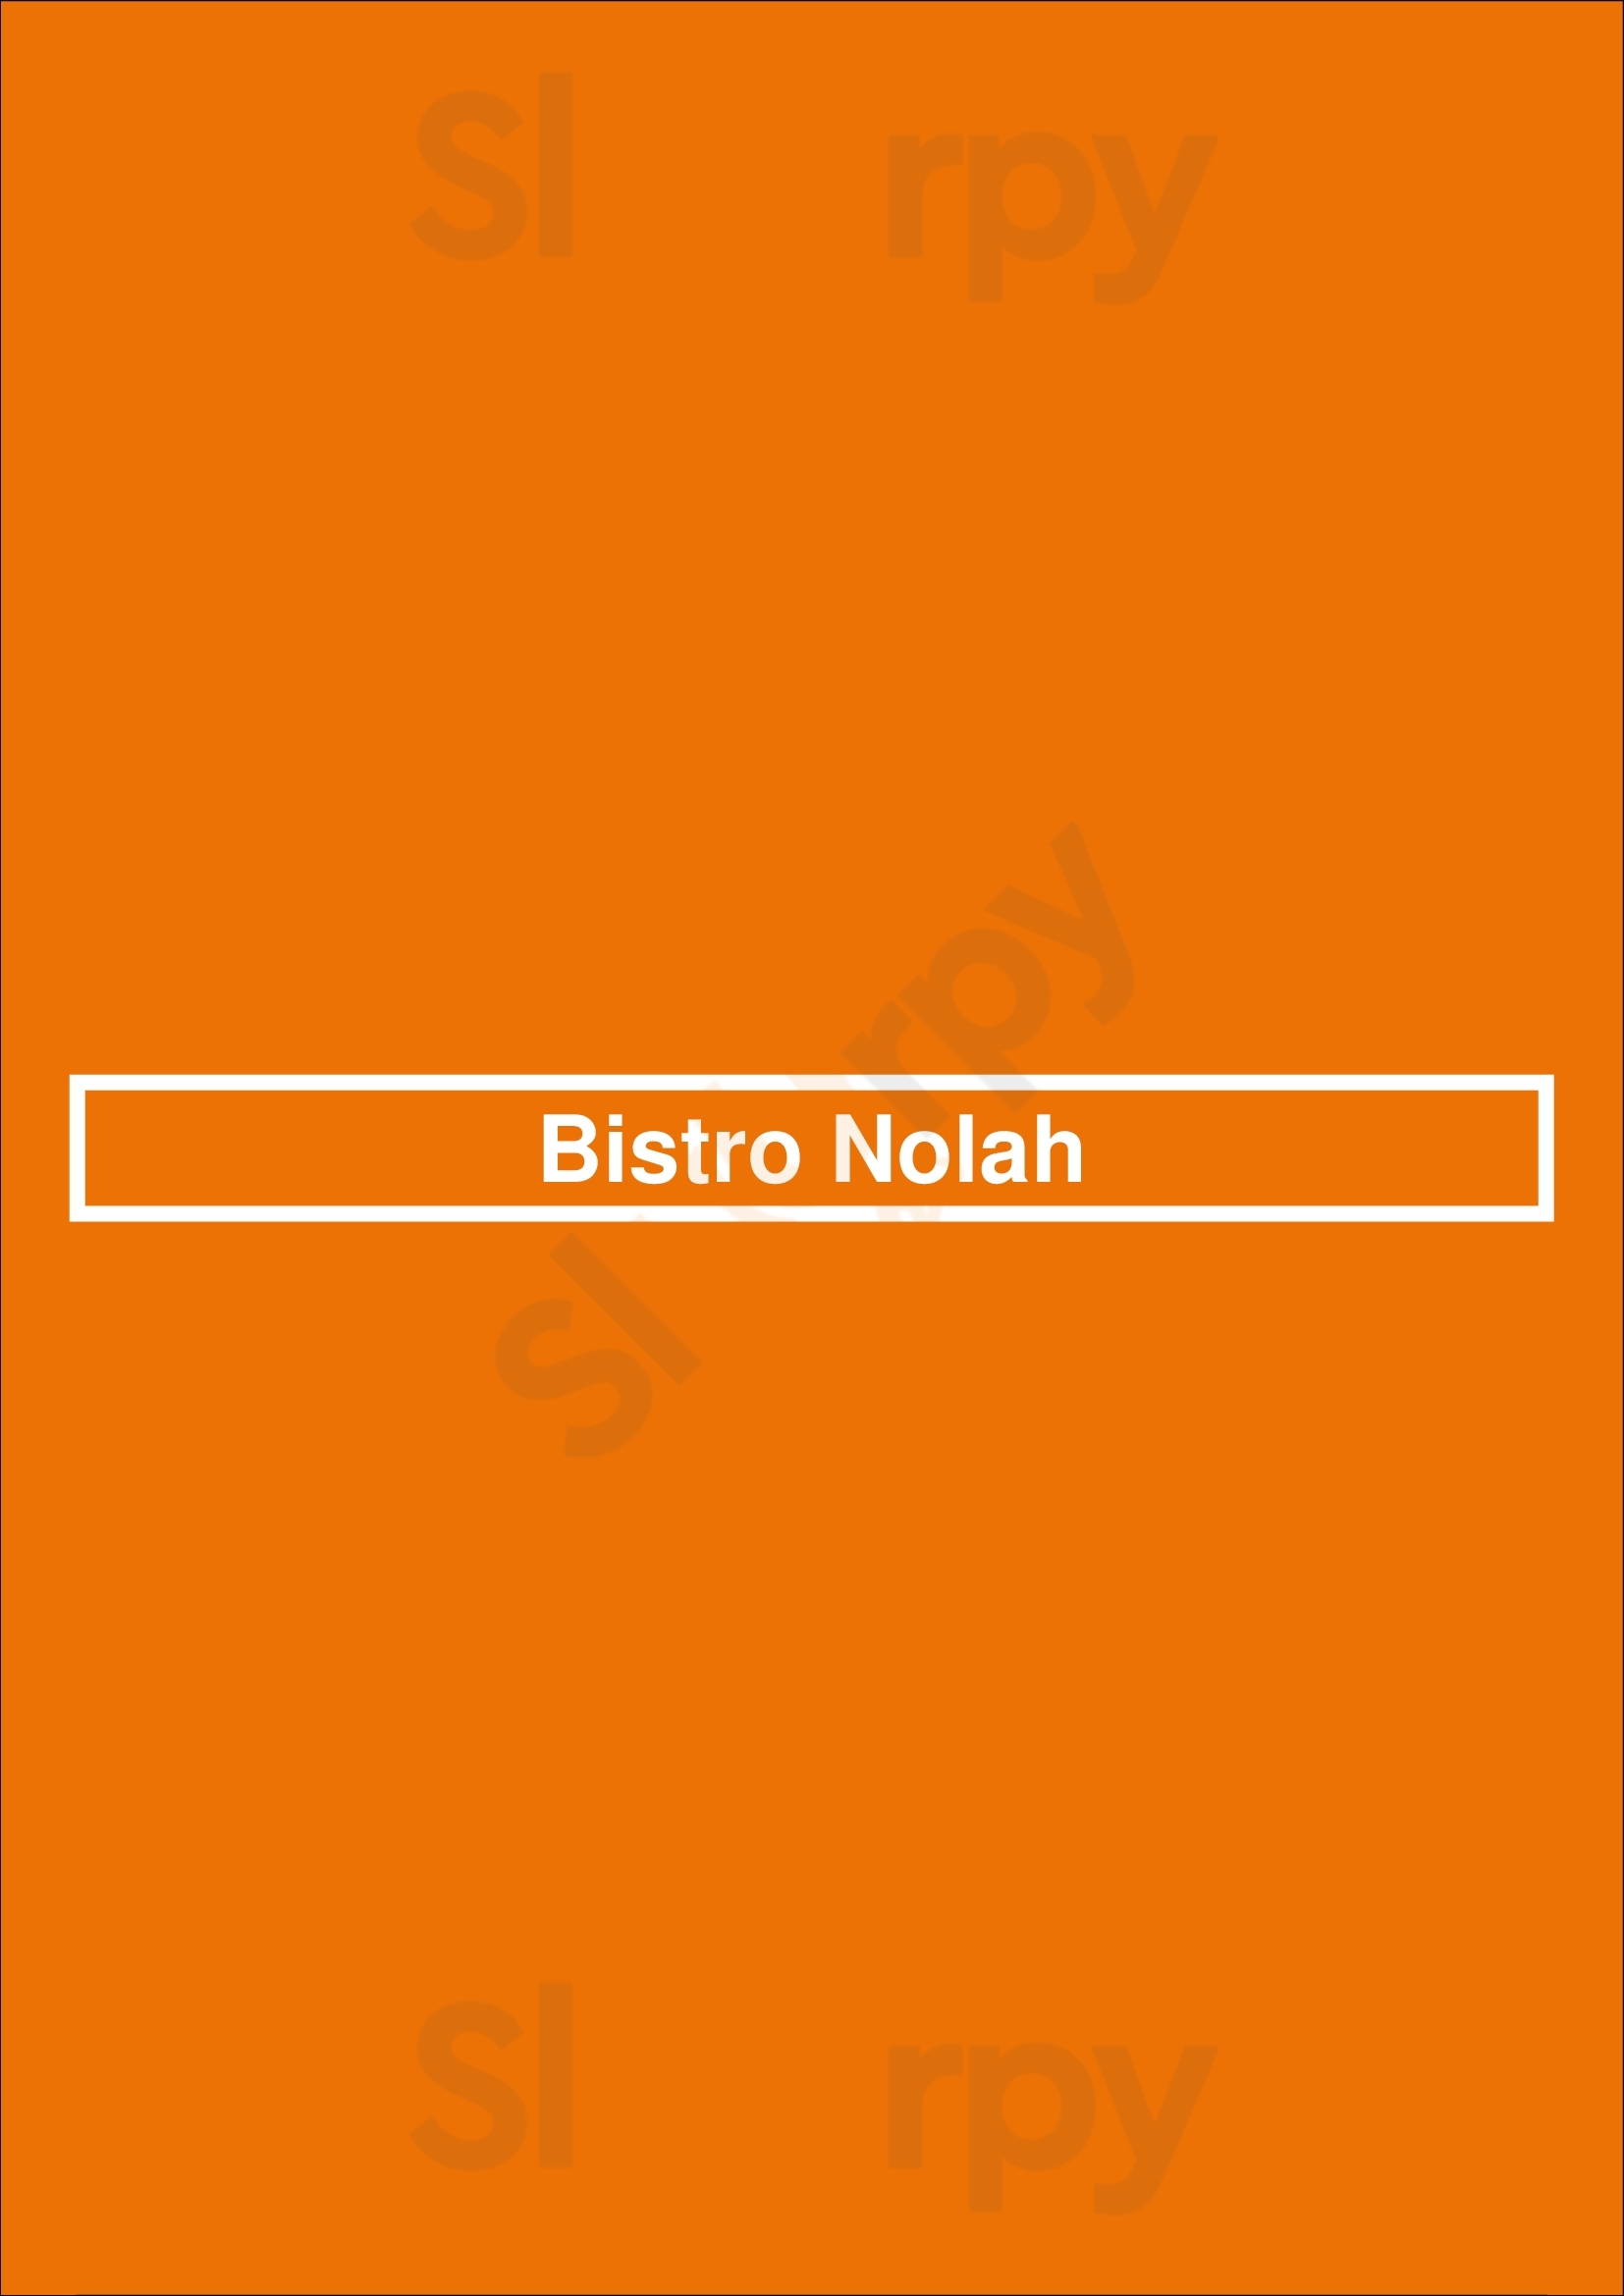 Bistro Nolah Dollard-des-Ormeaux Menu - 1